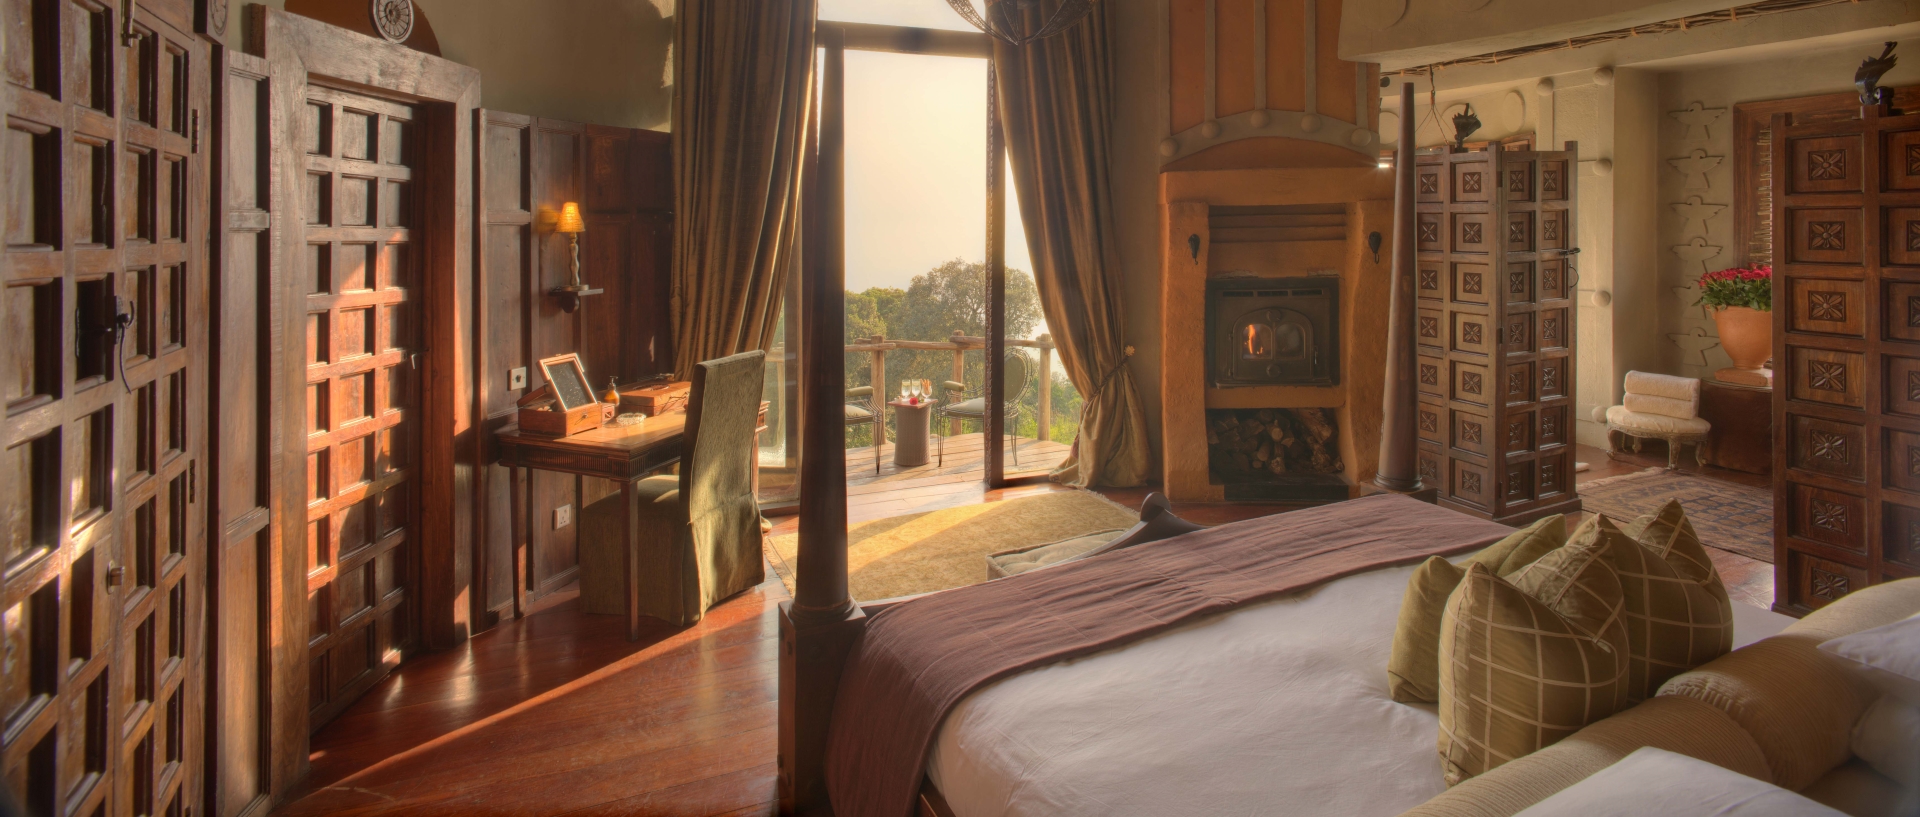 Bedroom at Ngorongoro Crater Lodge 